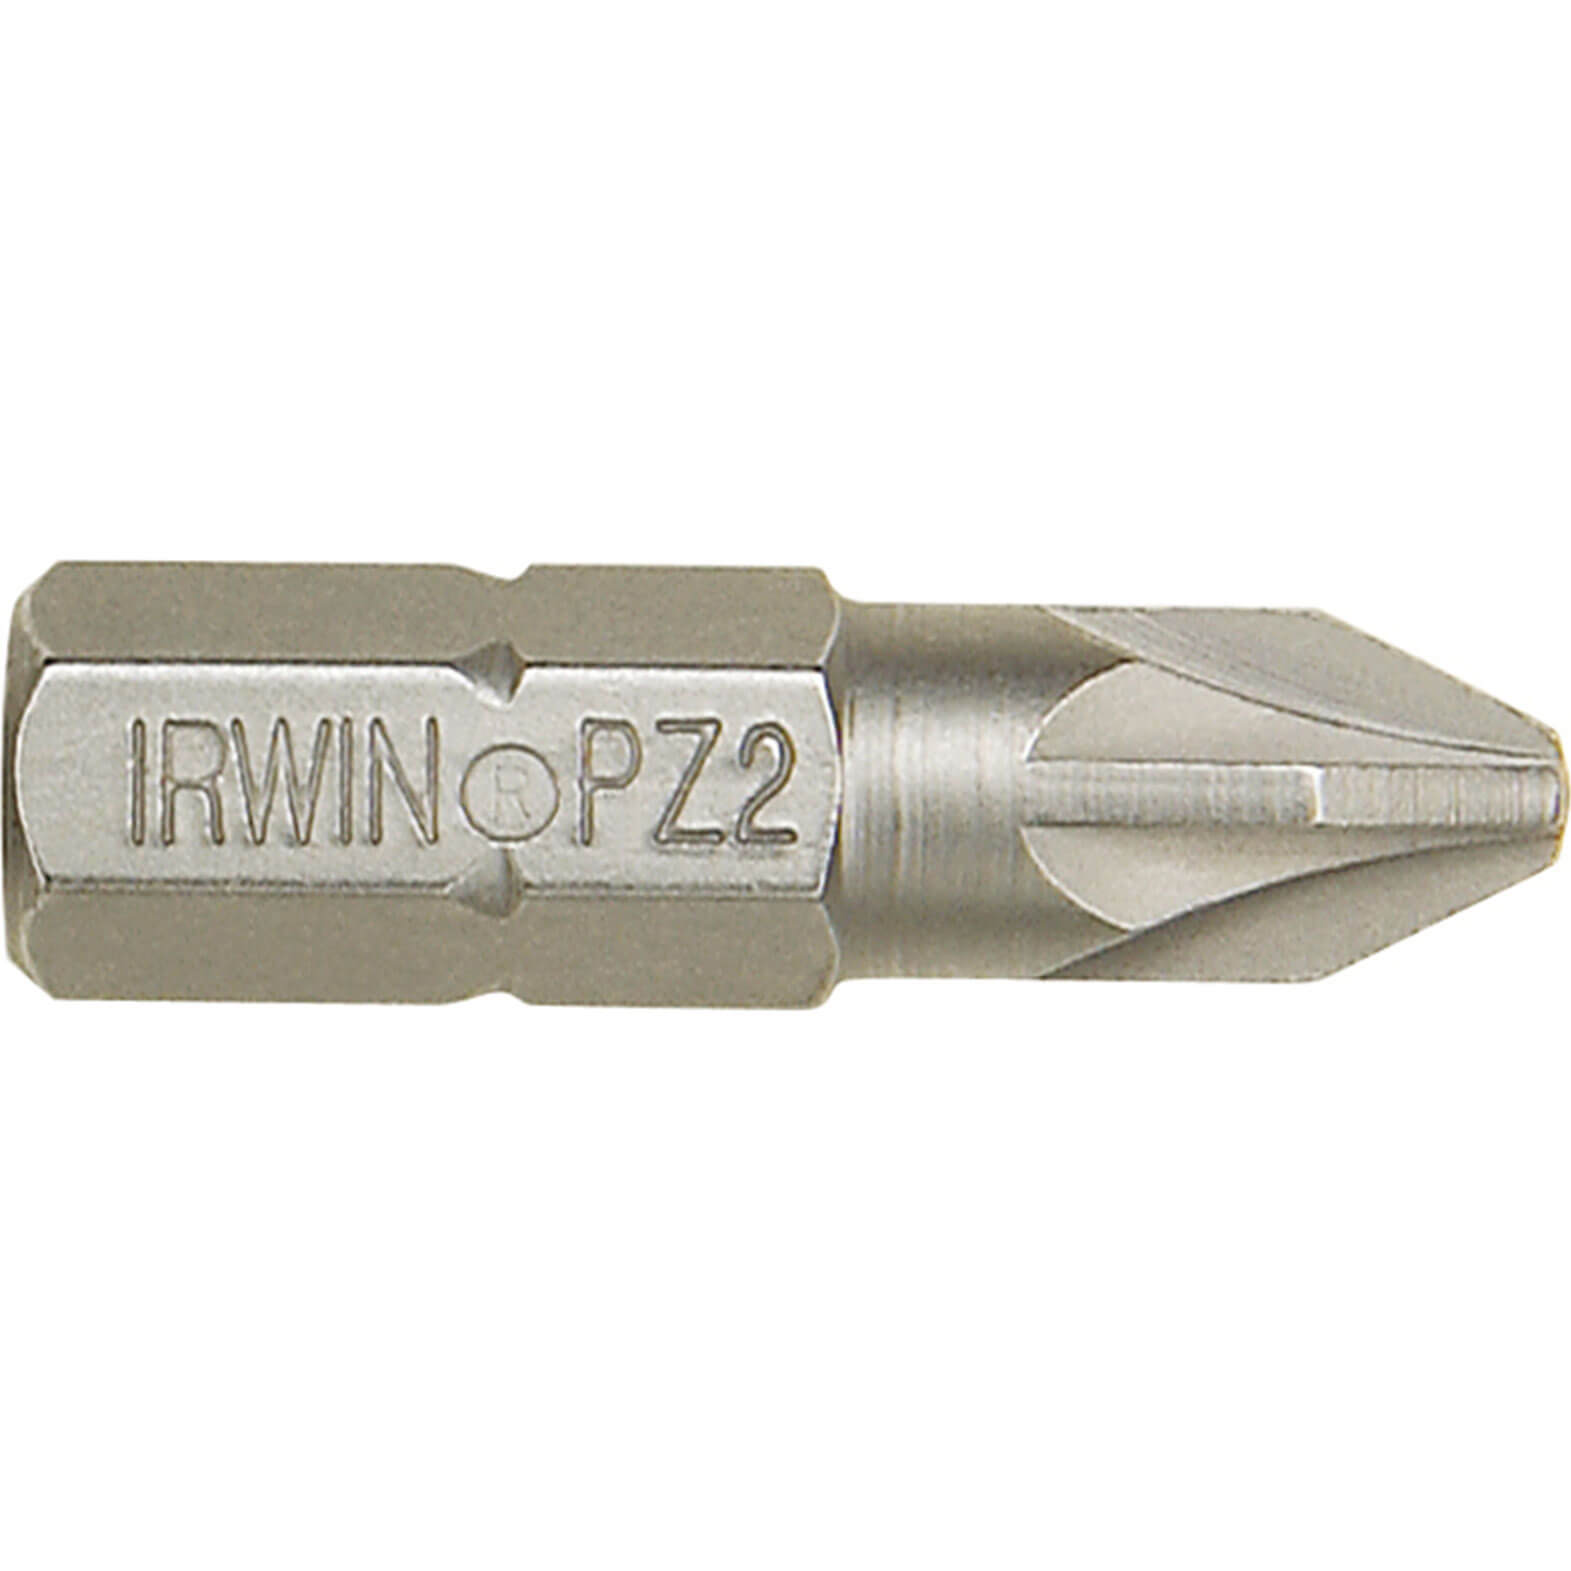 Photo of Irwin Pozi Screwdriver Bit Pz3 25mm Pack Of 2